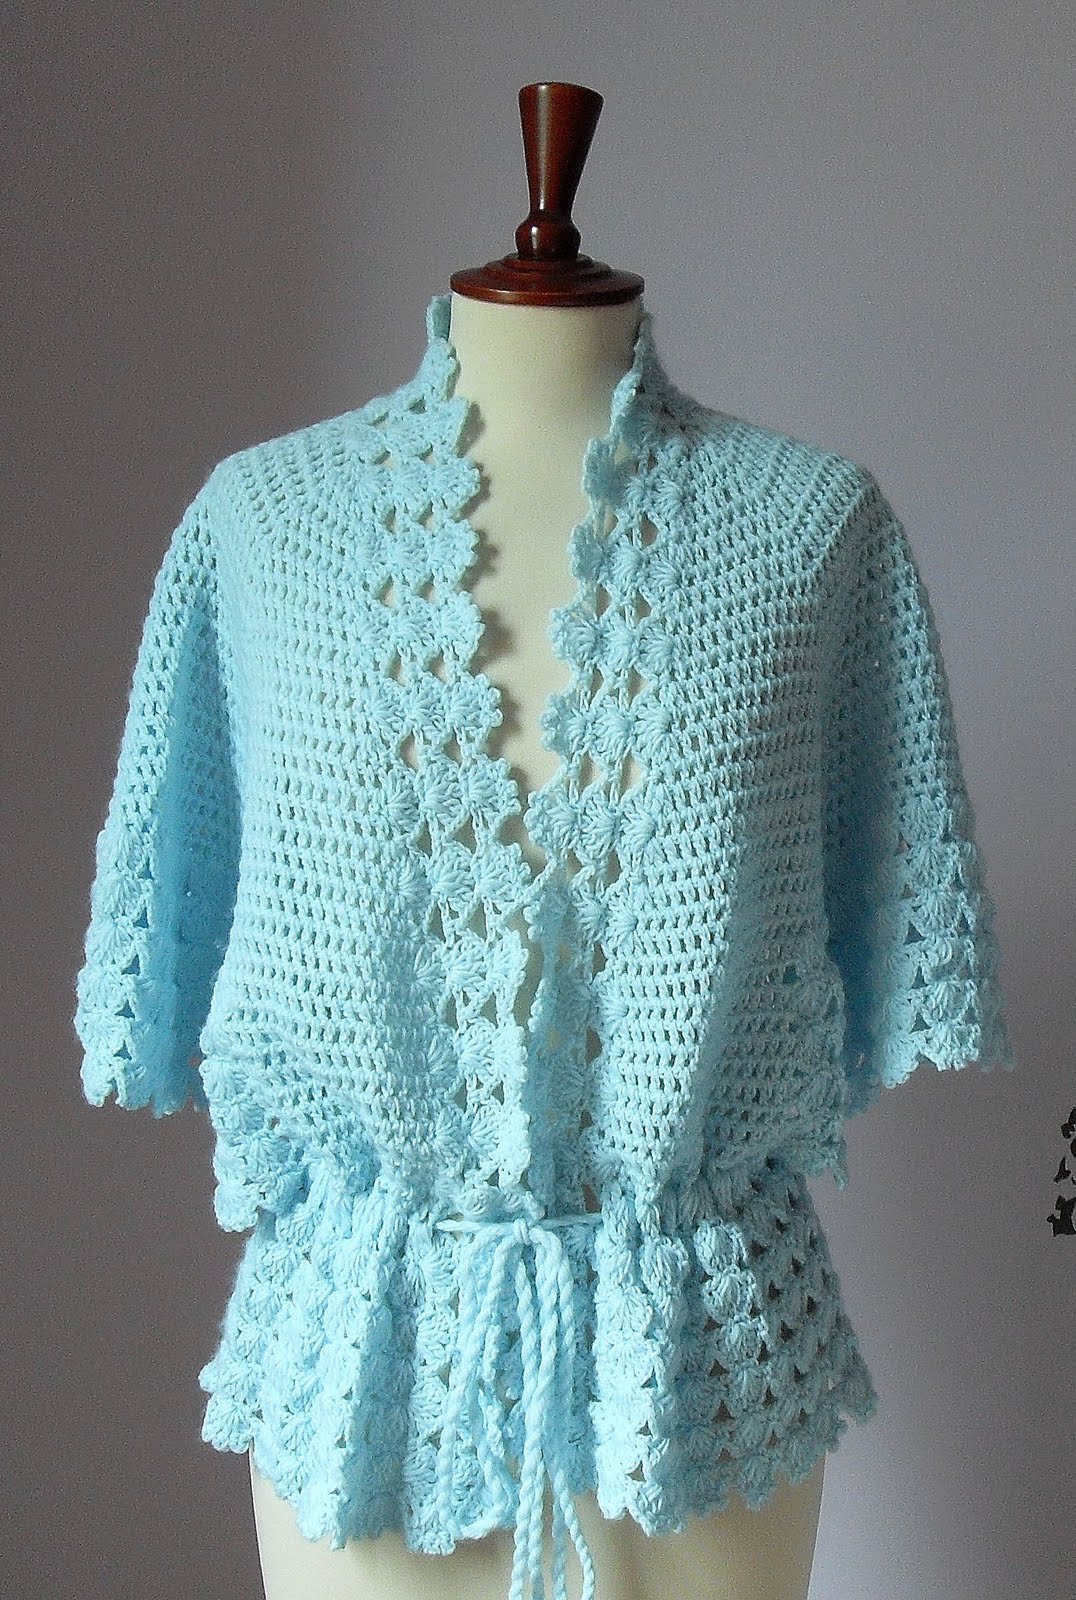 CROCHETED JACKET PATTERNS - Crochet And Knitting Patterns